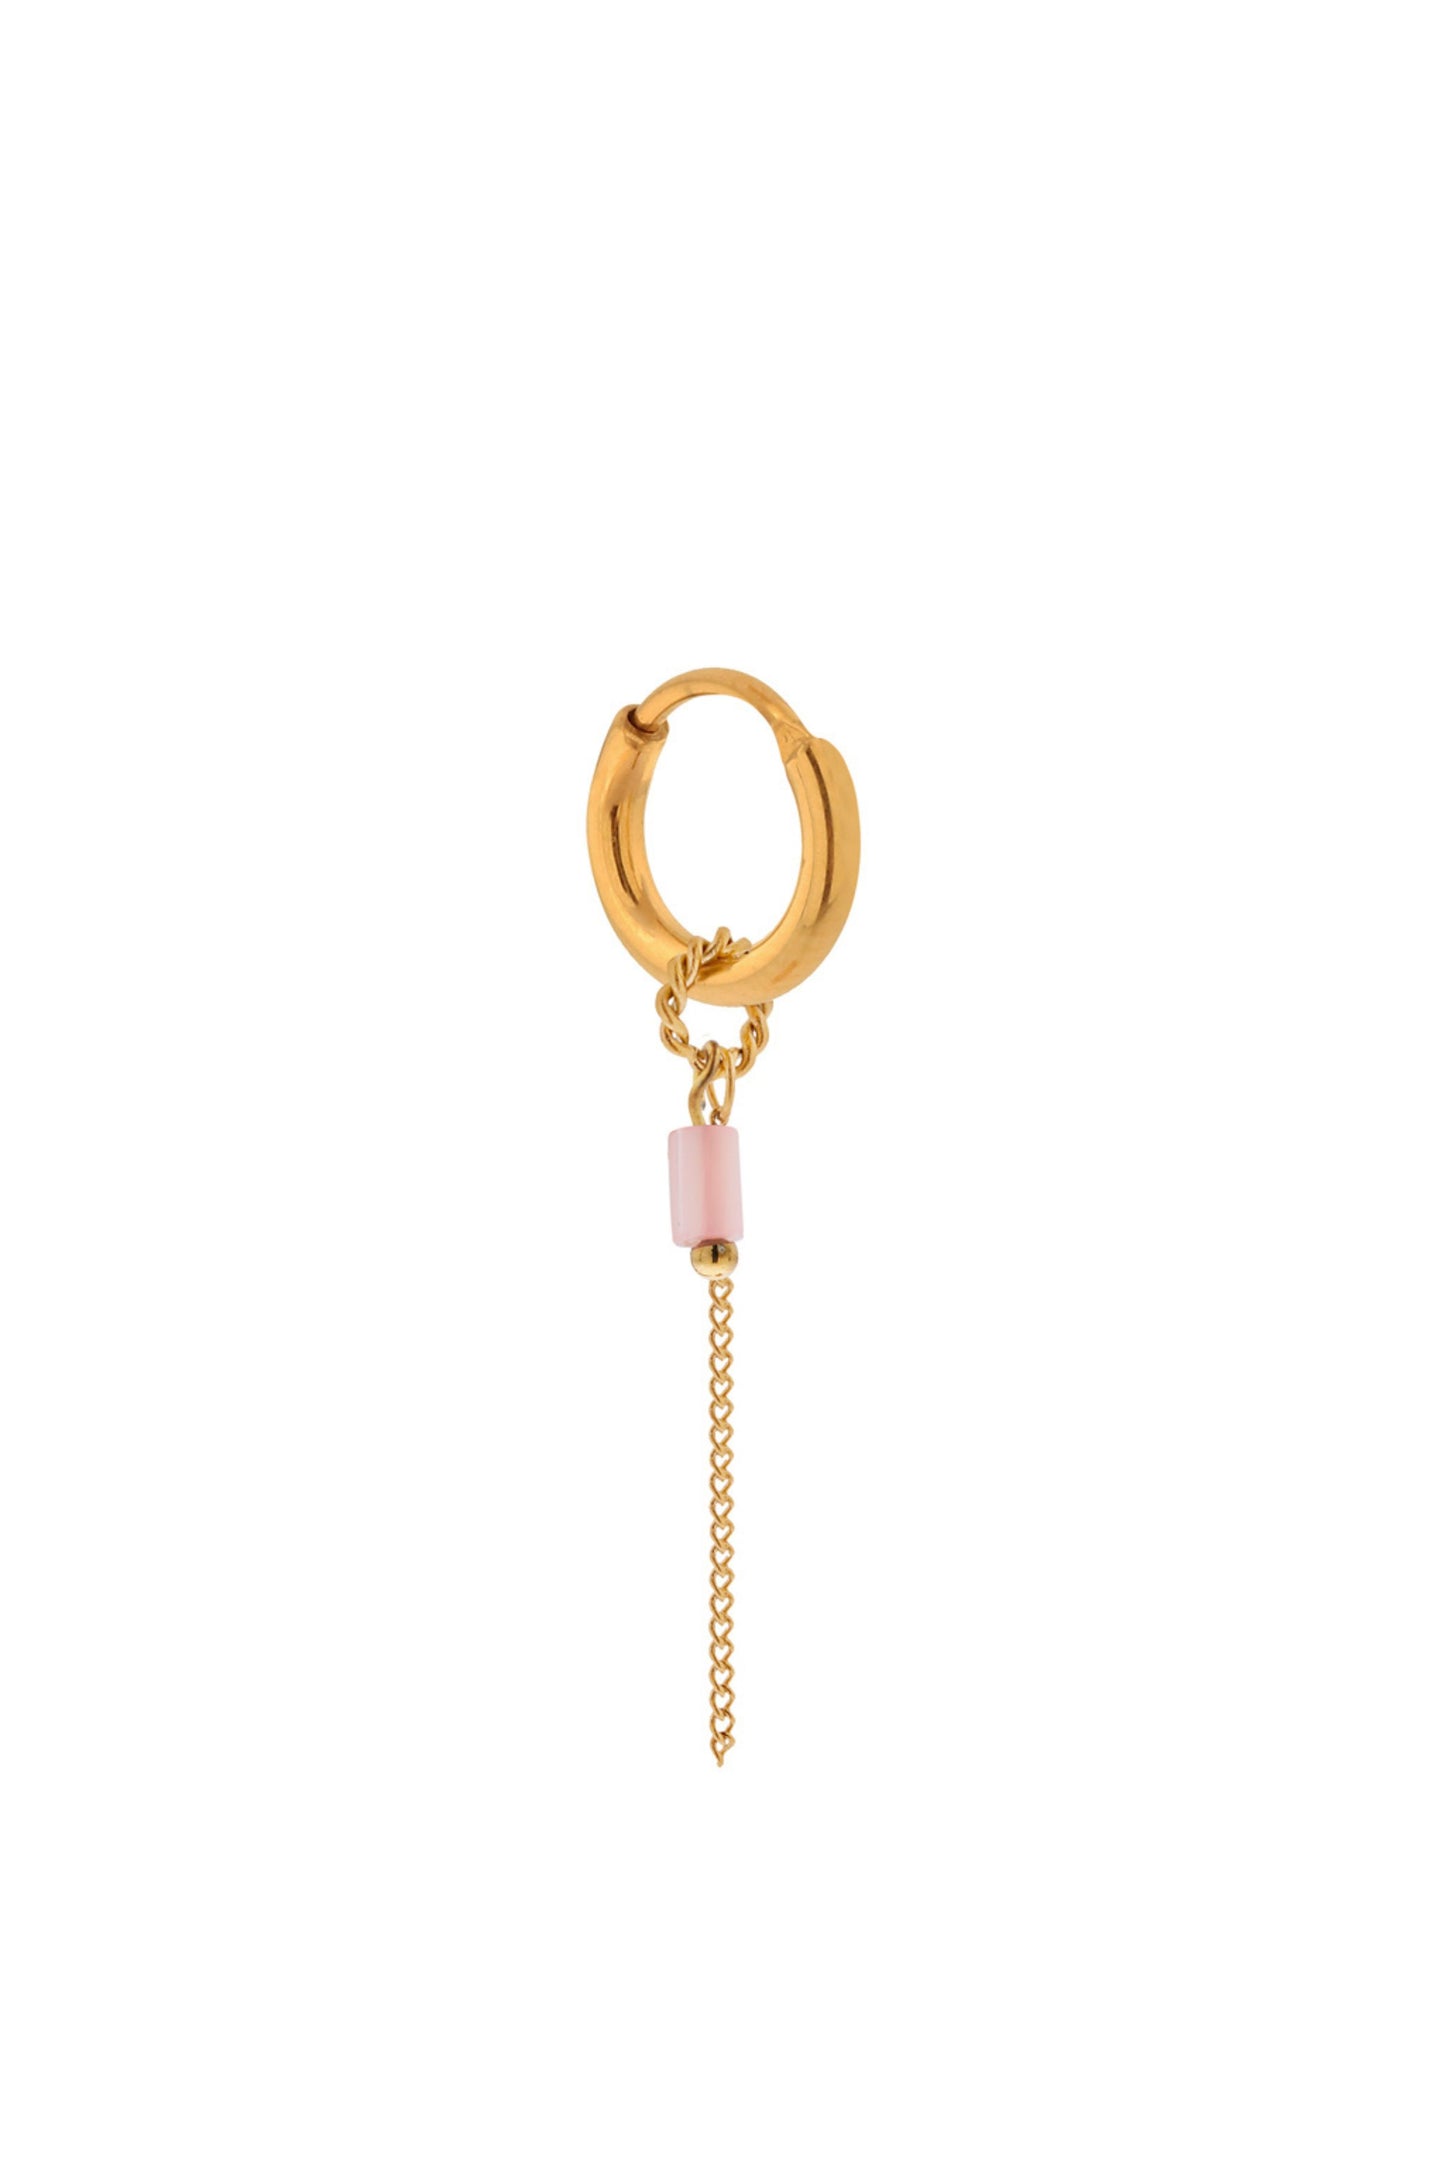 Afbeelding laden in galerijviewer, Single Chain Pink Stone Hoop - Gold
